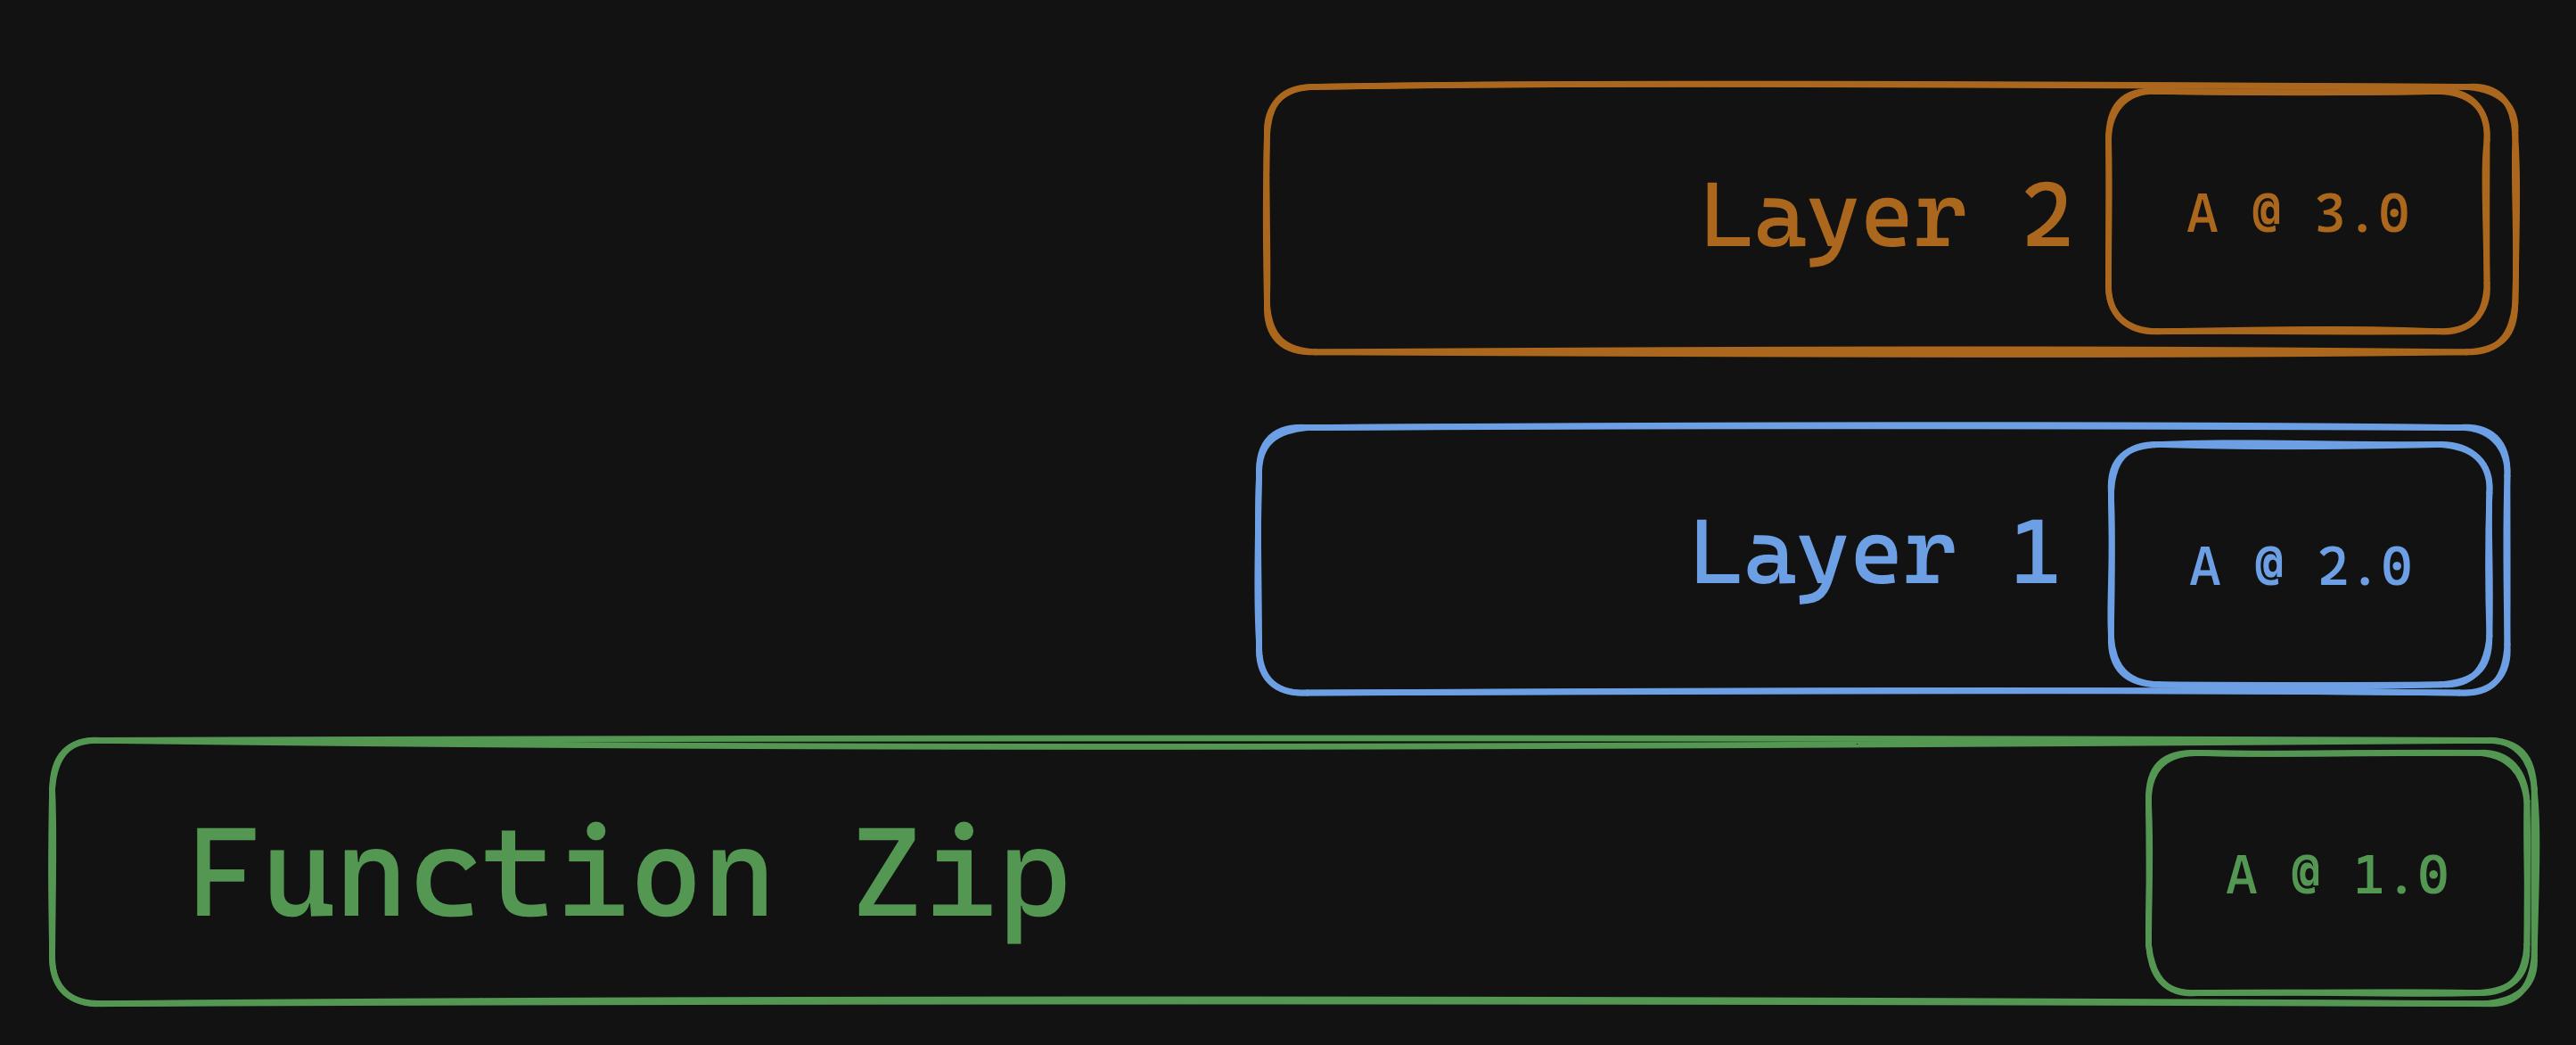 Lambda function code requiring A @ 1.0, layer 1 requiring A @ 2.0, and layer 2 requiring A @ 3.0